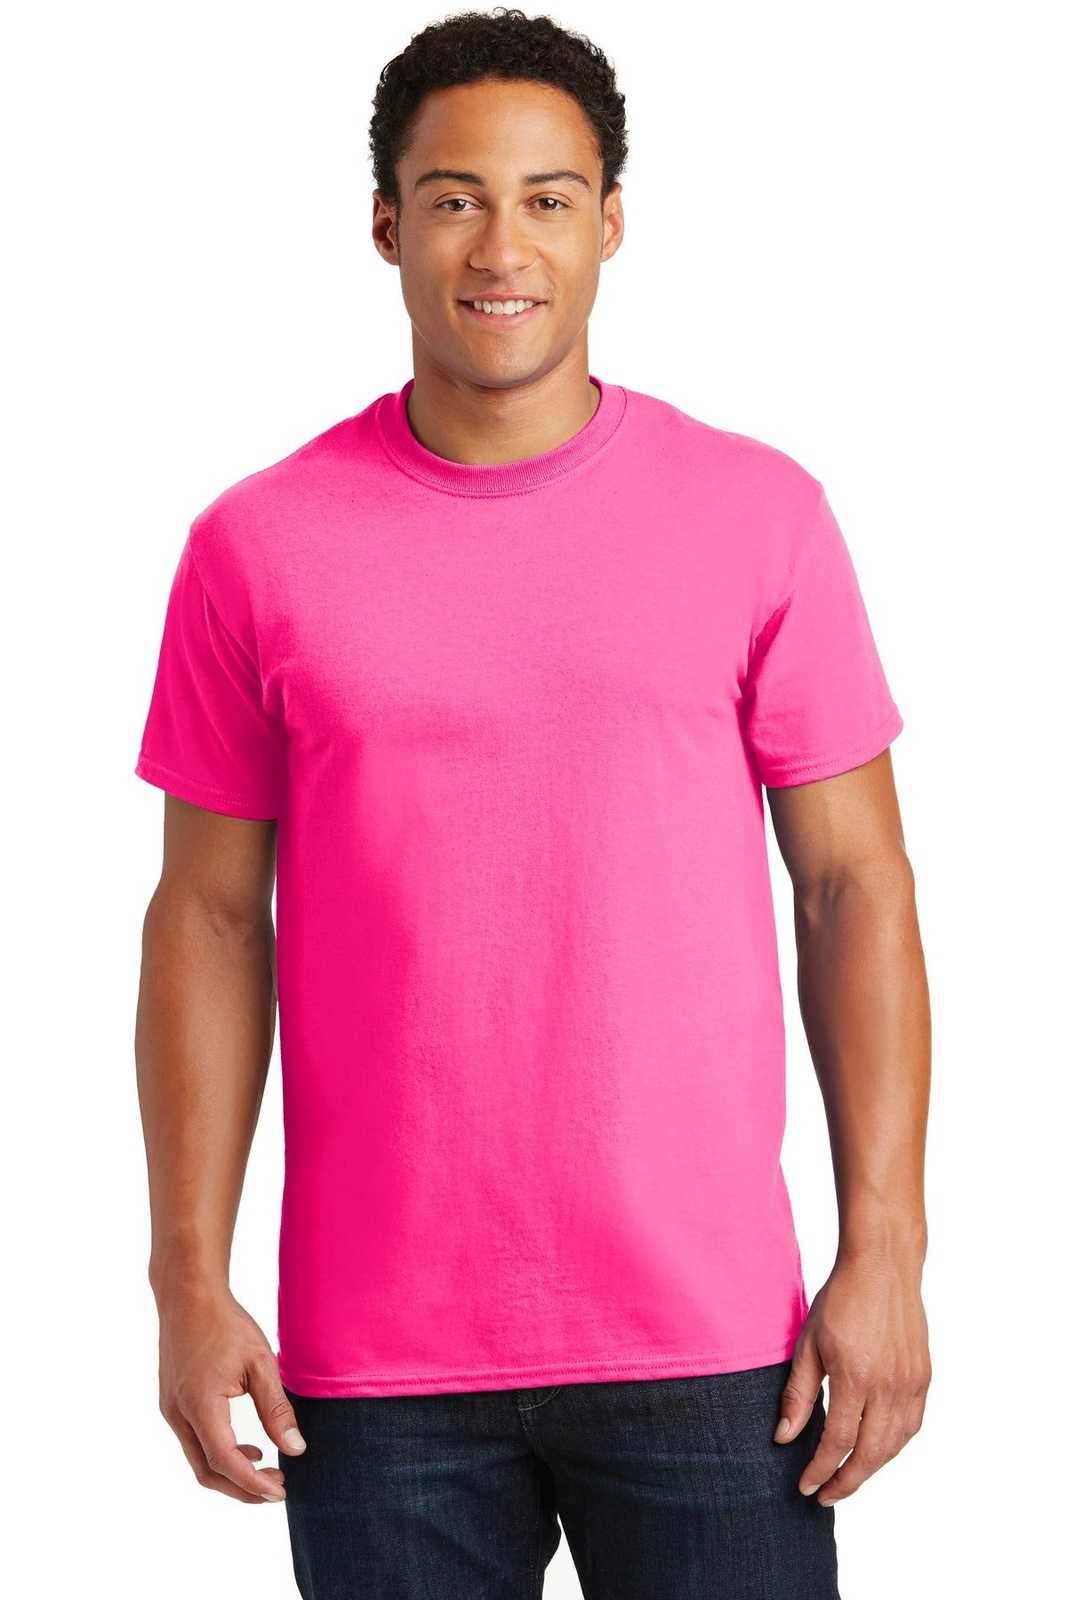 Gildan 2000 Ultra Cotton 100% Cotton T-Shirt - Safety Pink - HIT a Double